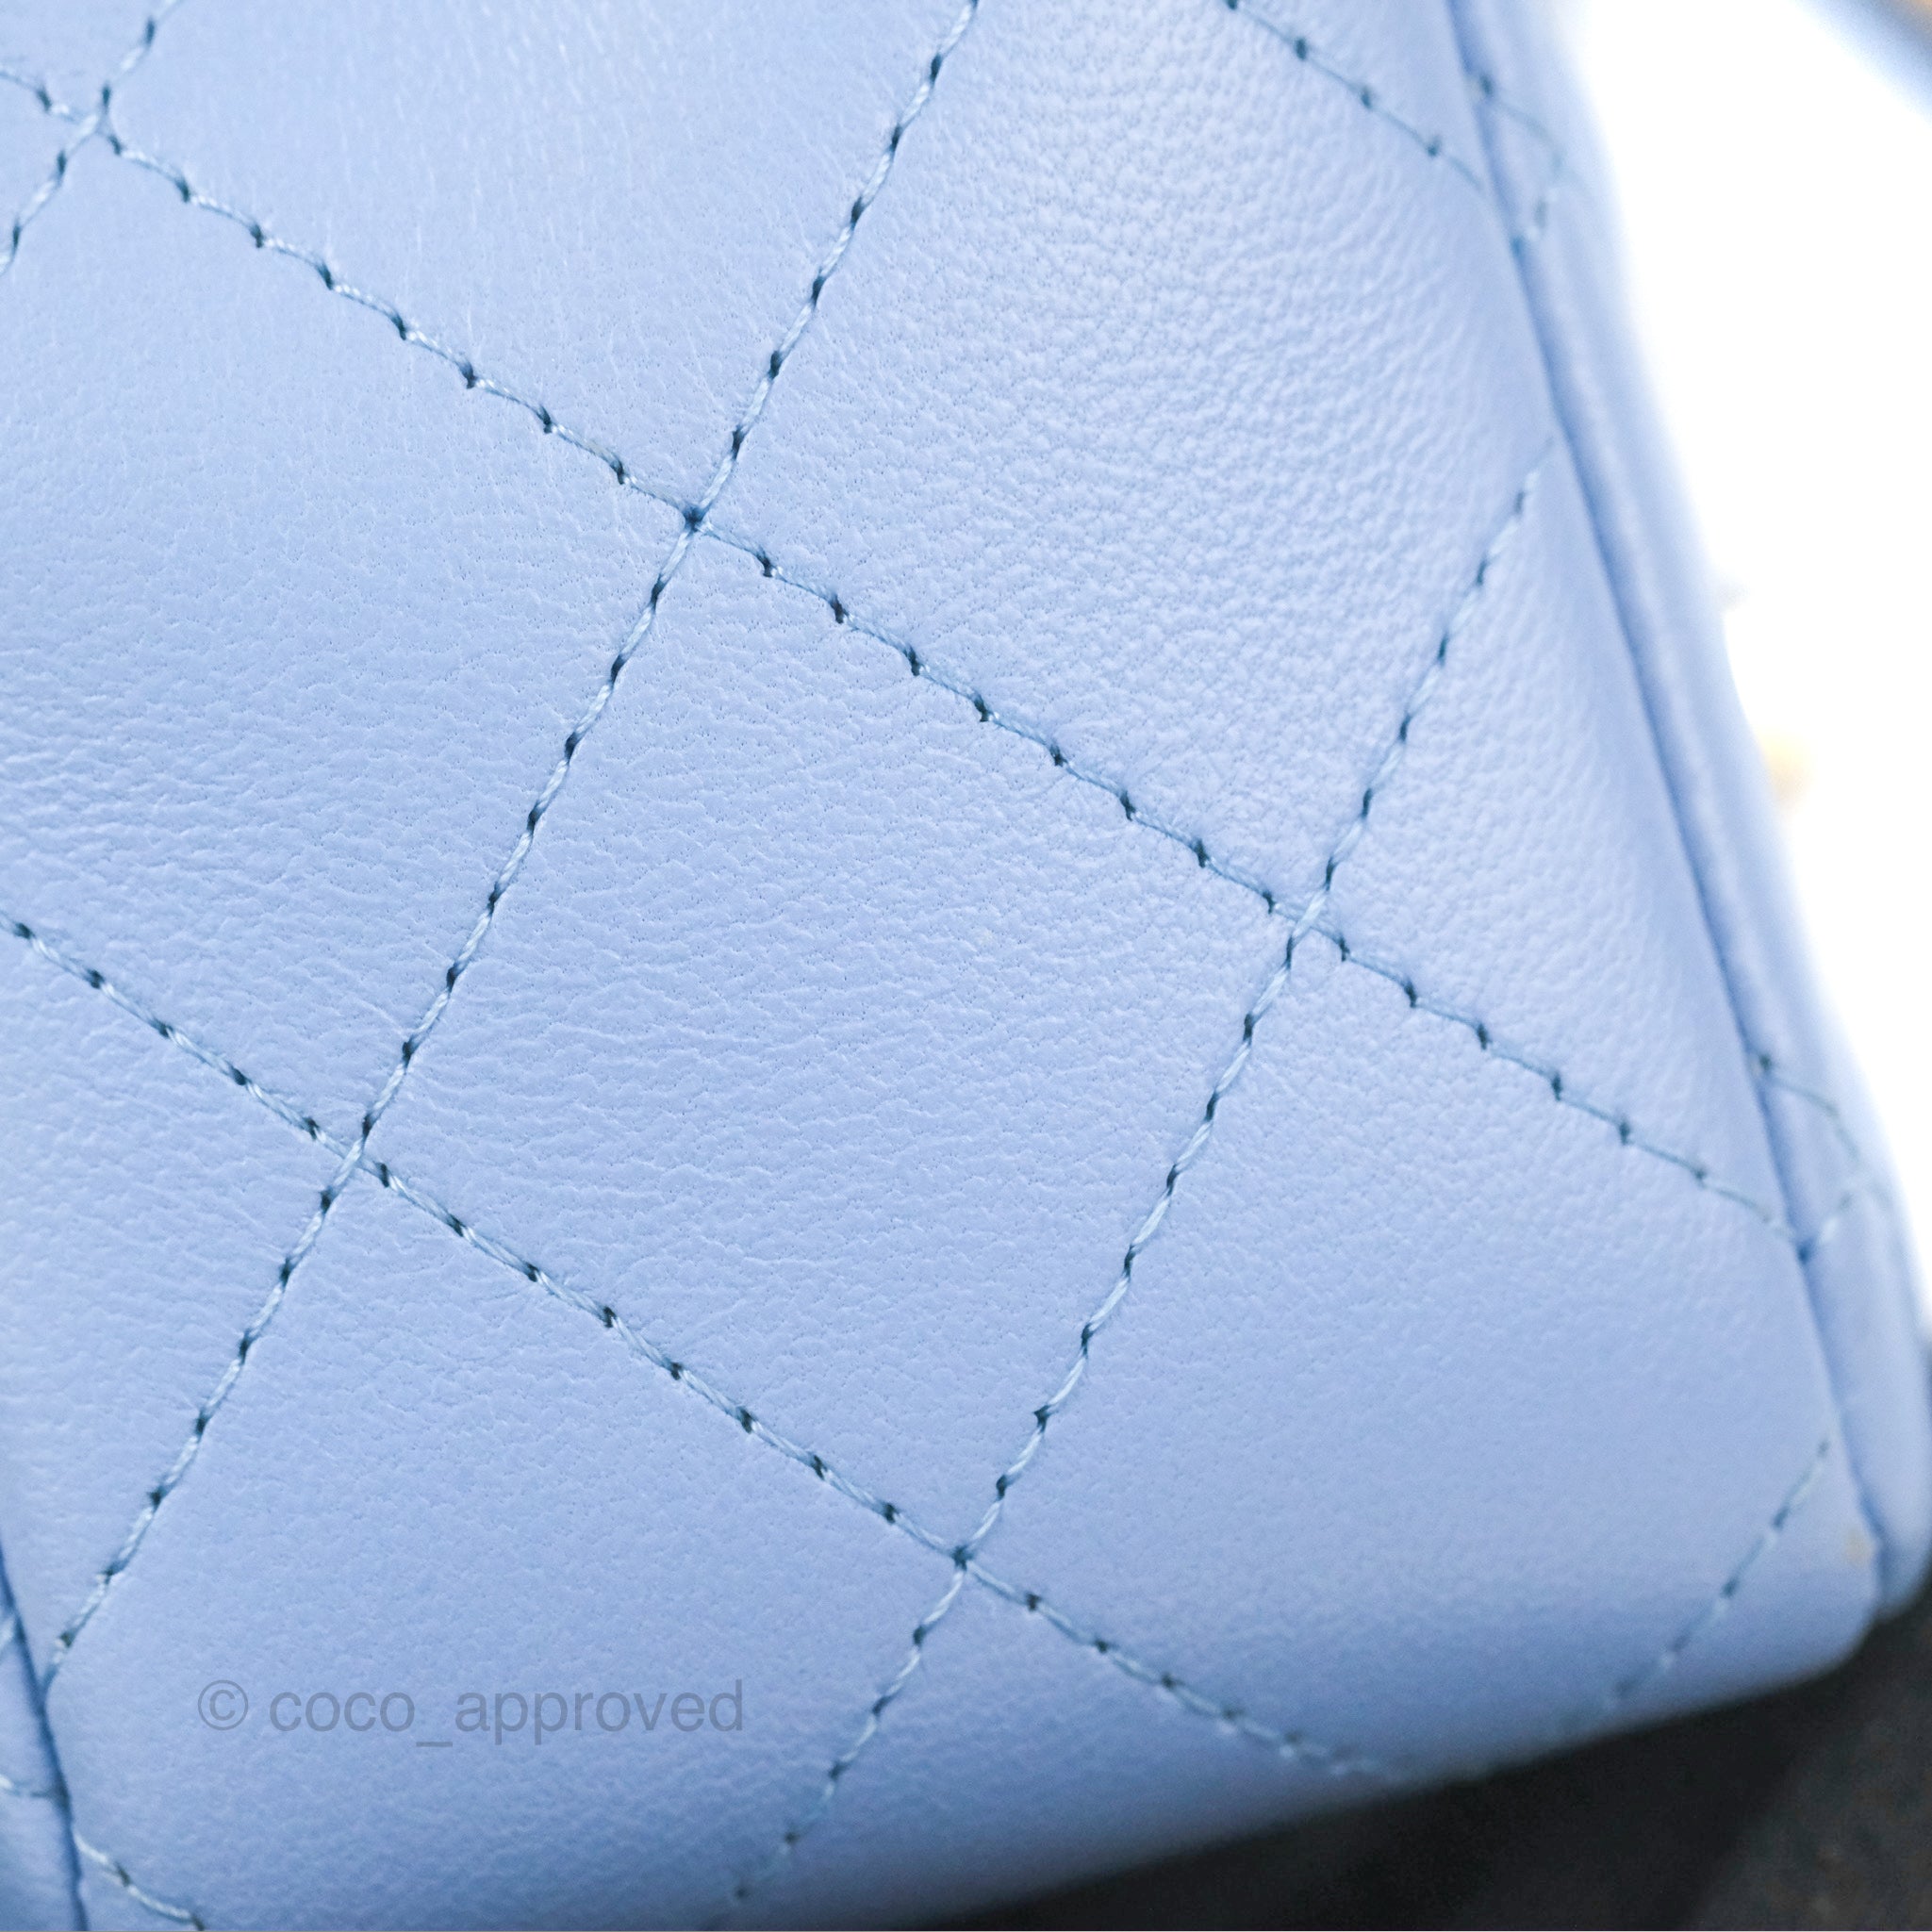 Chanel Classic Mini Rectangular Flap Blue Sky Lambskin Gold Hardware 2 –  Coco Approved Studio